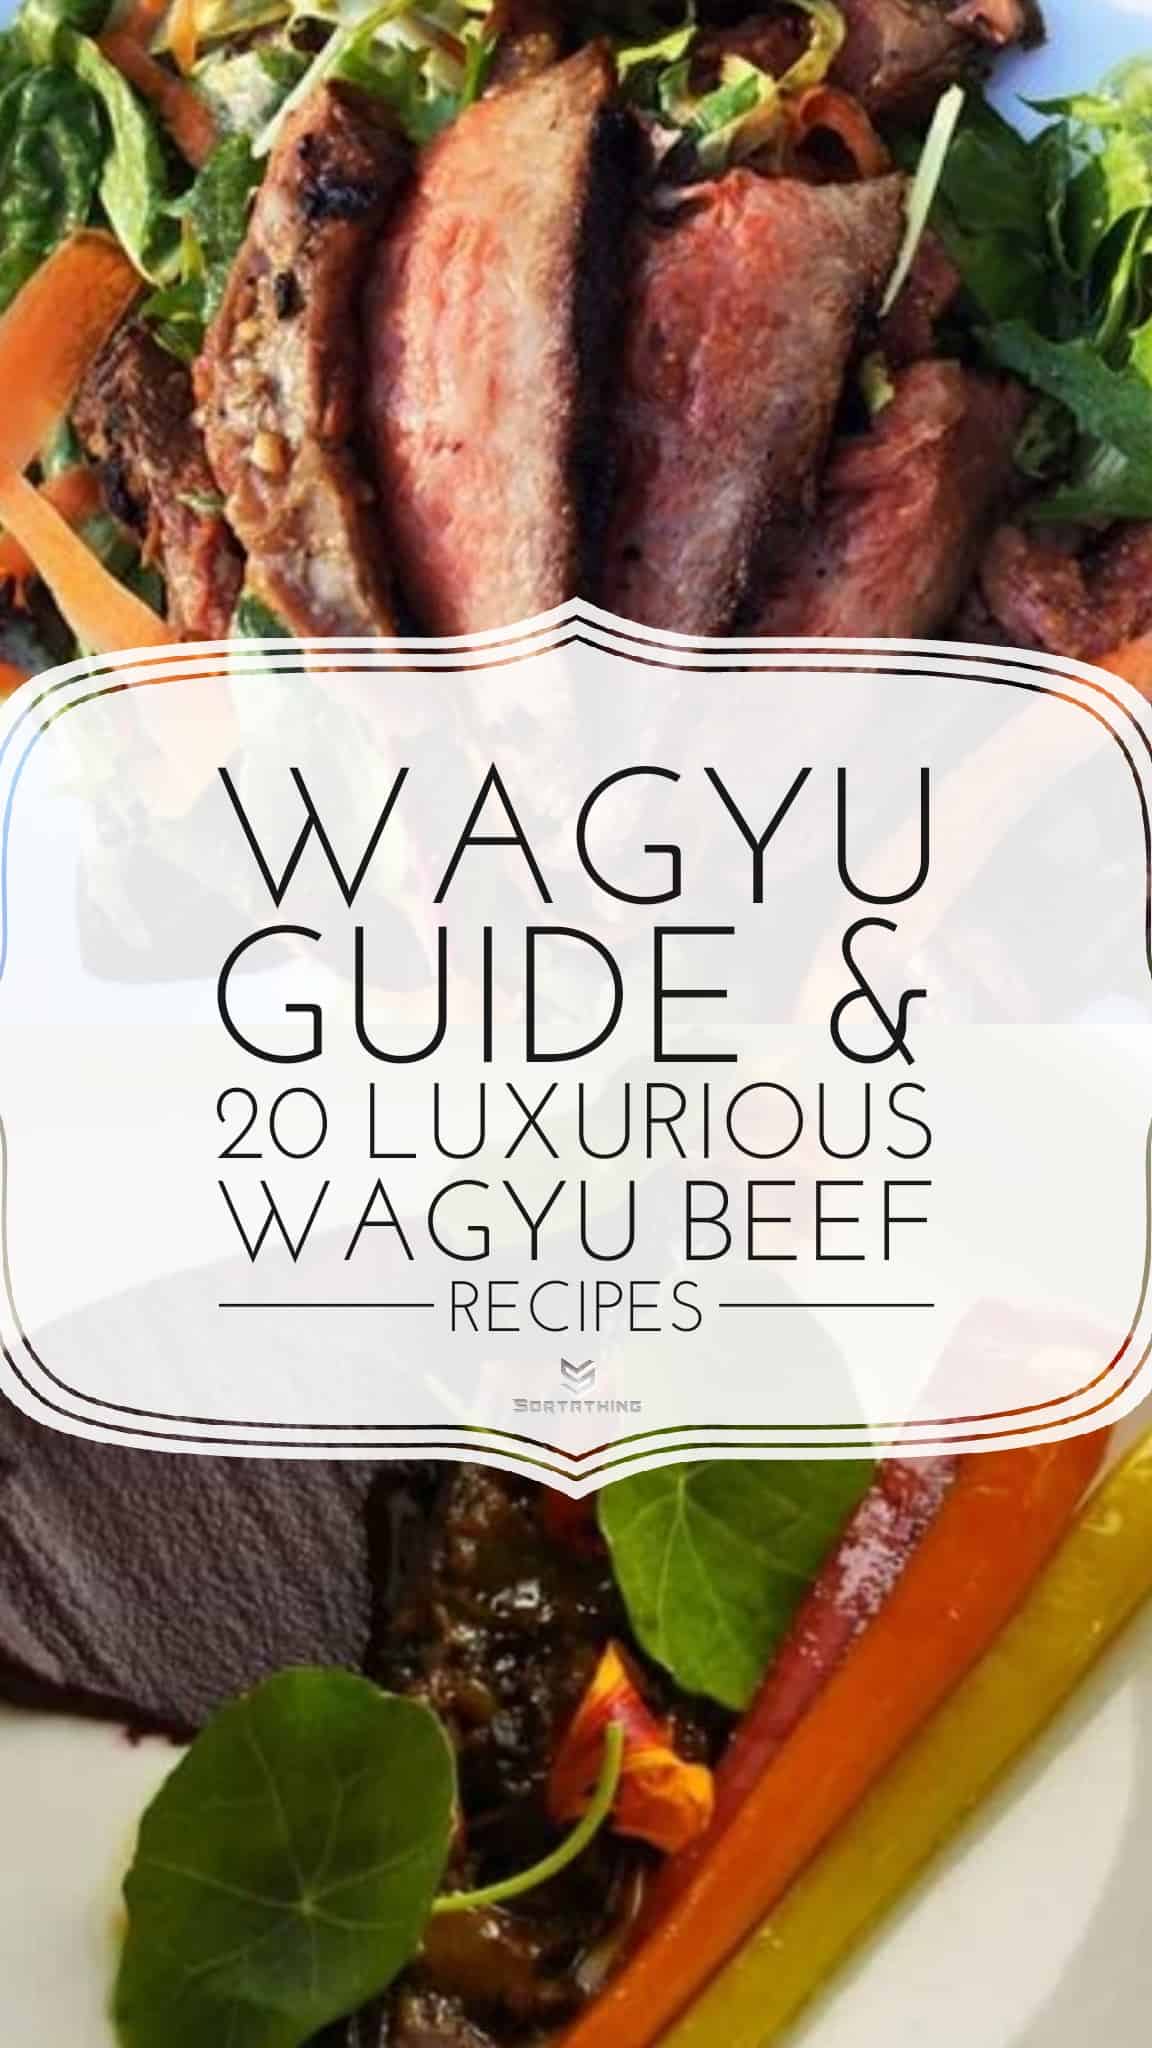 Wagyu Rib Lifter Salad and Braised Wagyu Oxtail